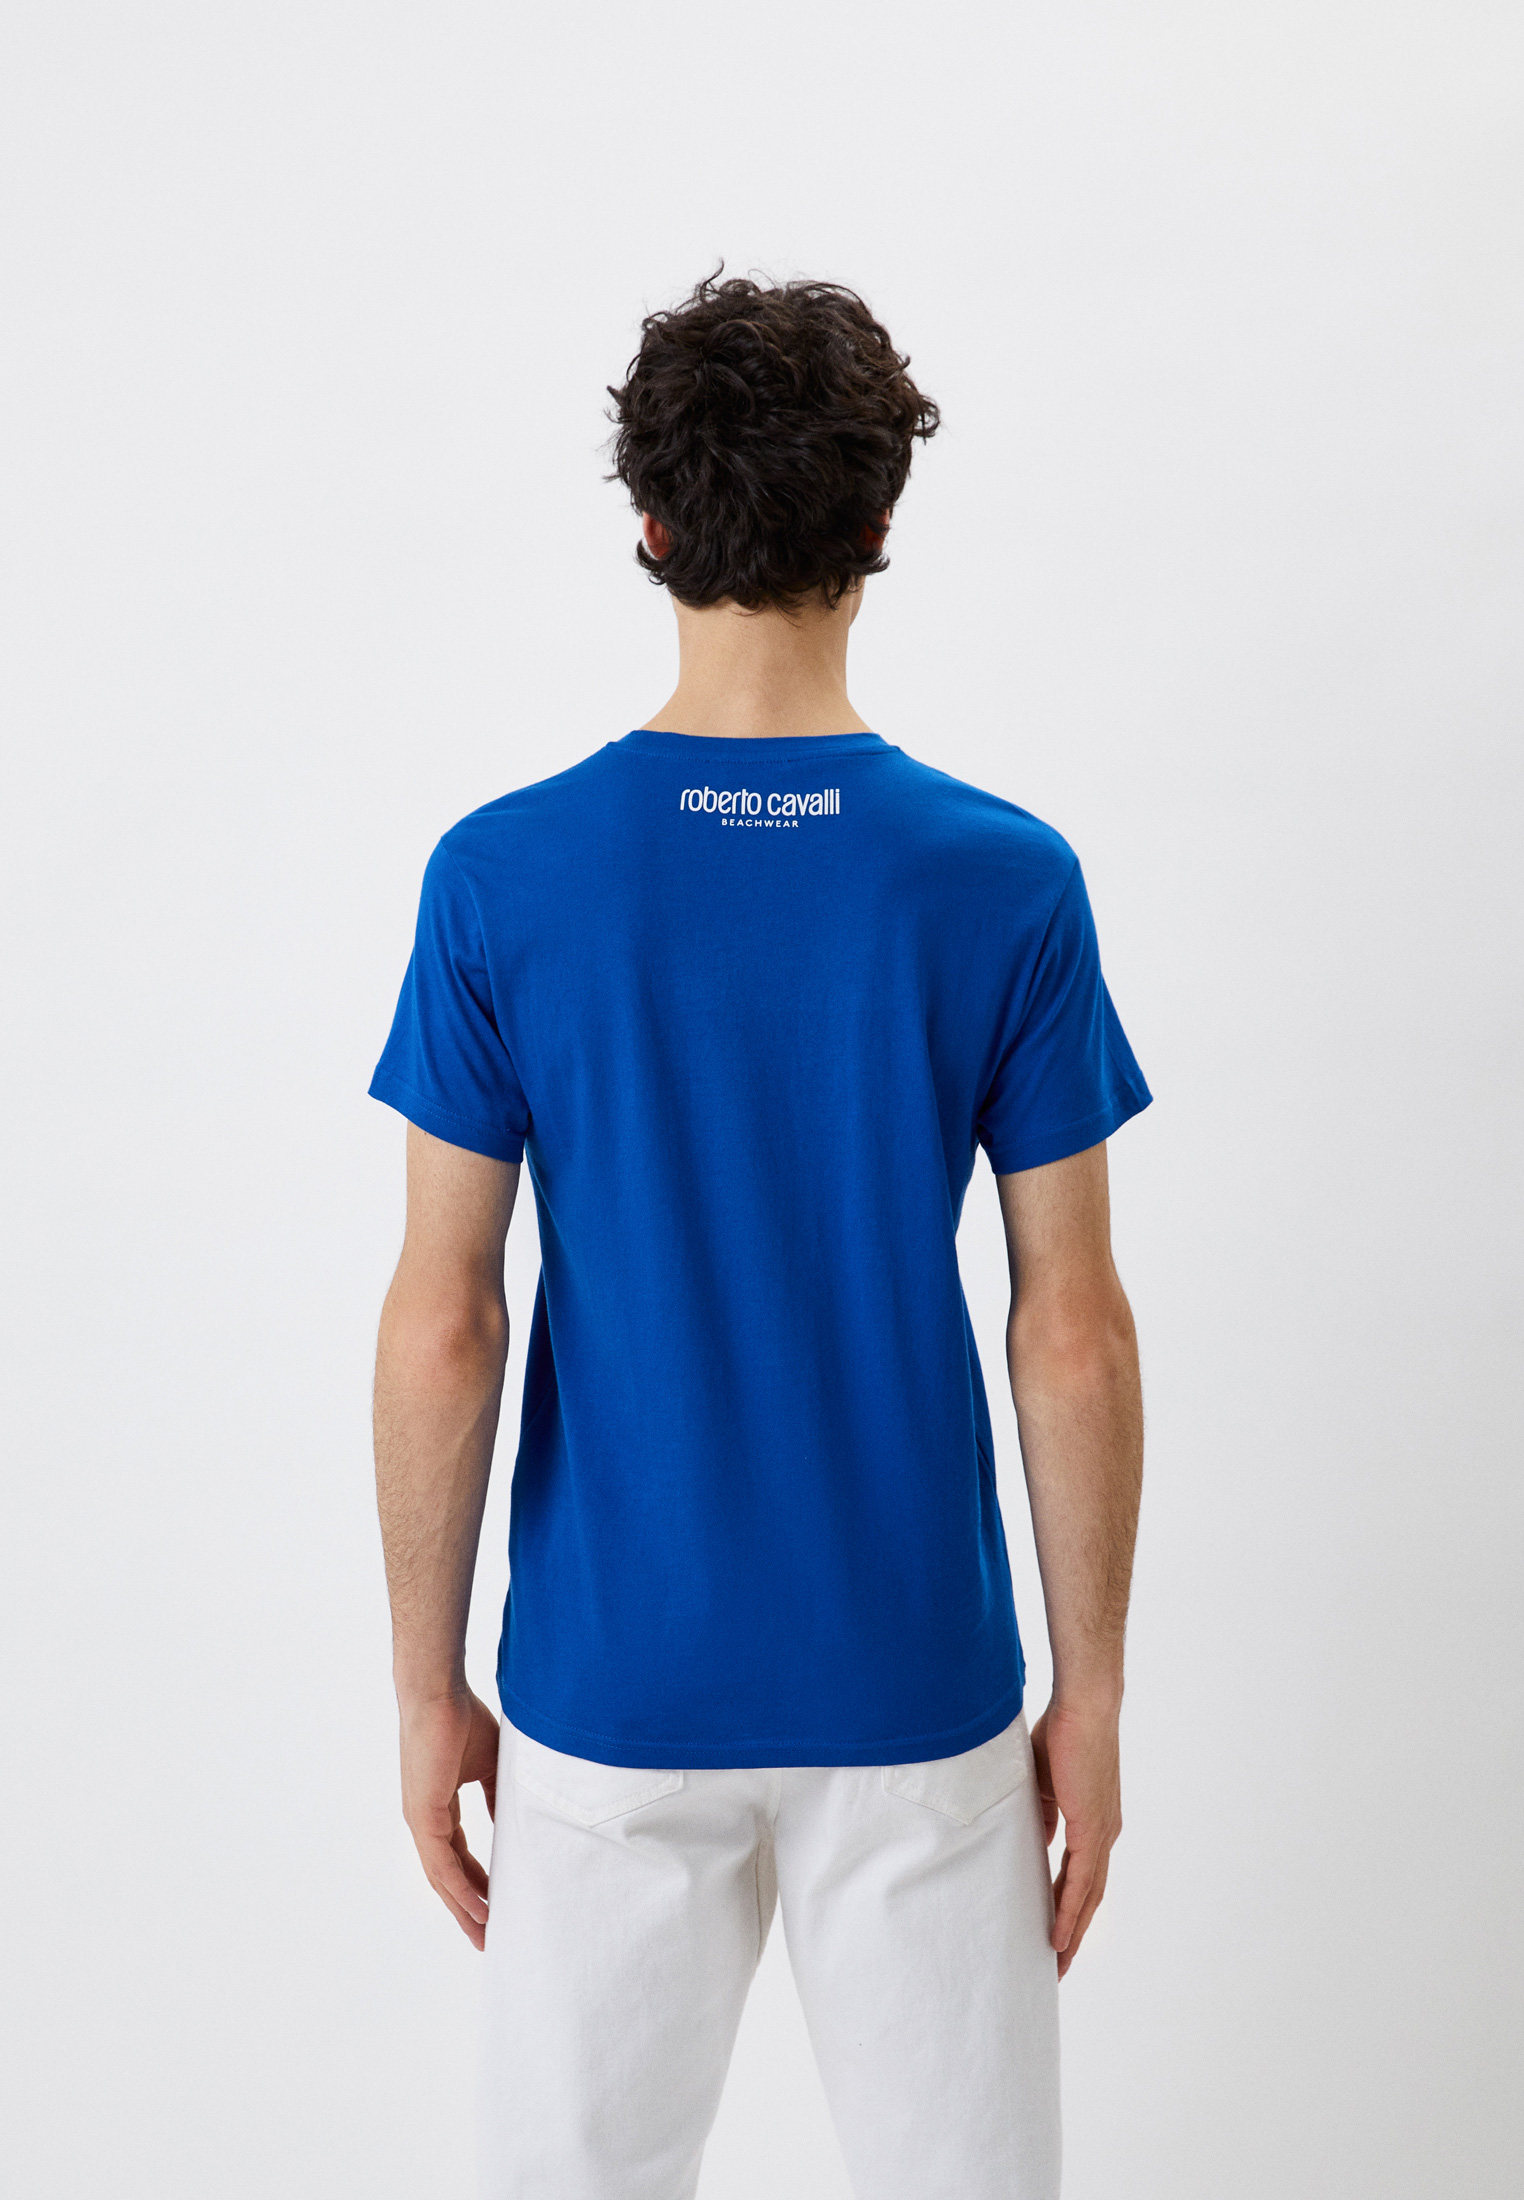 Мужская футболка Roberto Cavalli (Роберто Кавалли) HSH01T: изображение 3